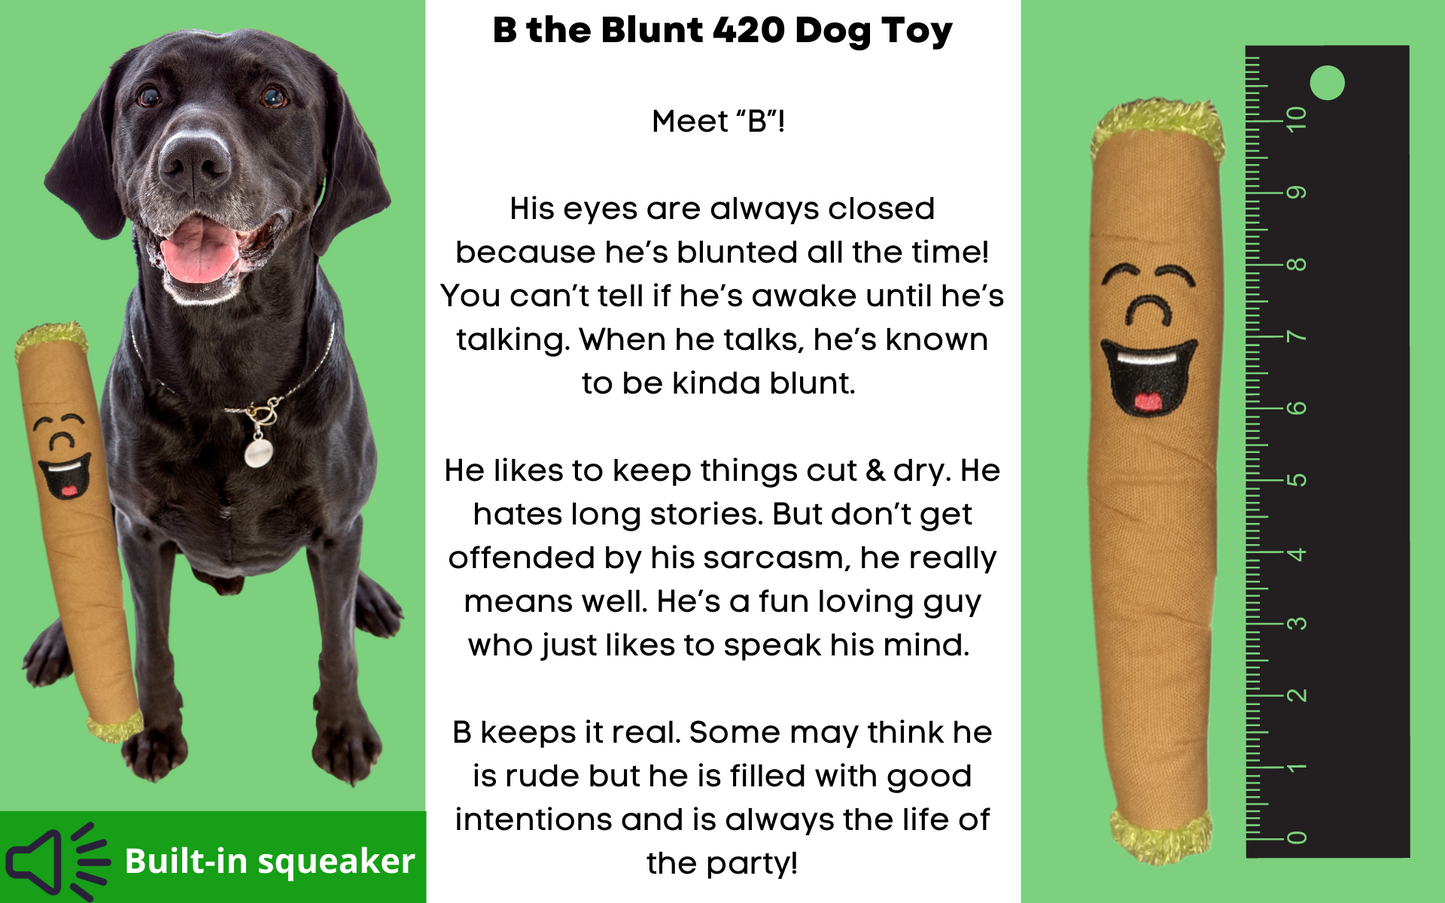 B the Blunt 420 theme plush toy